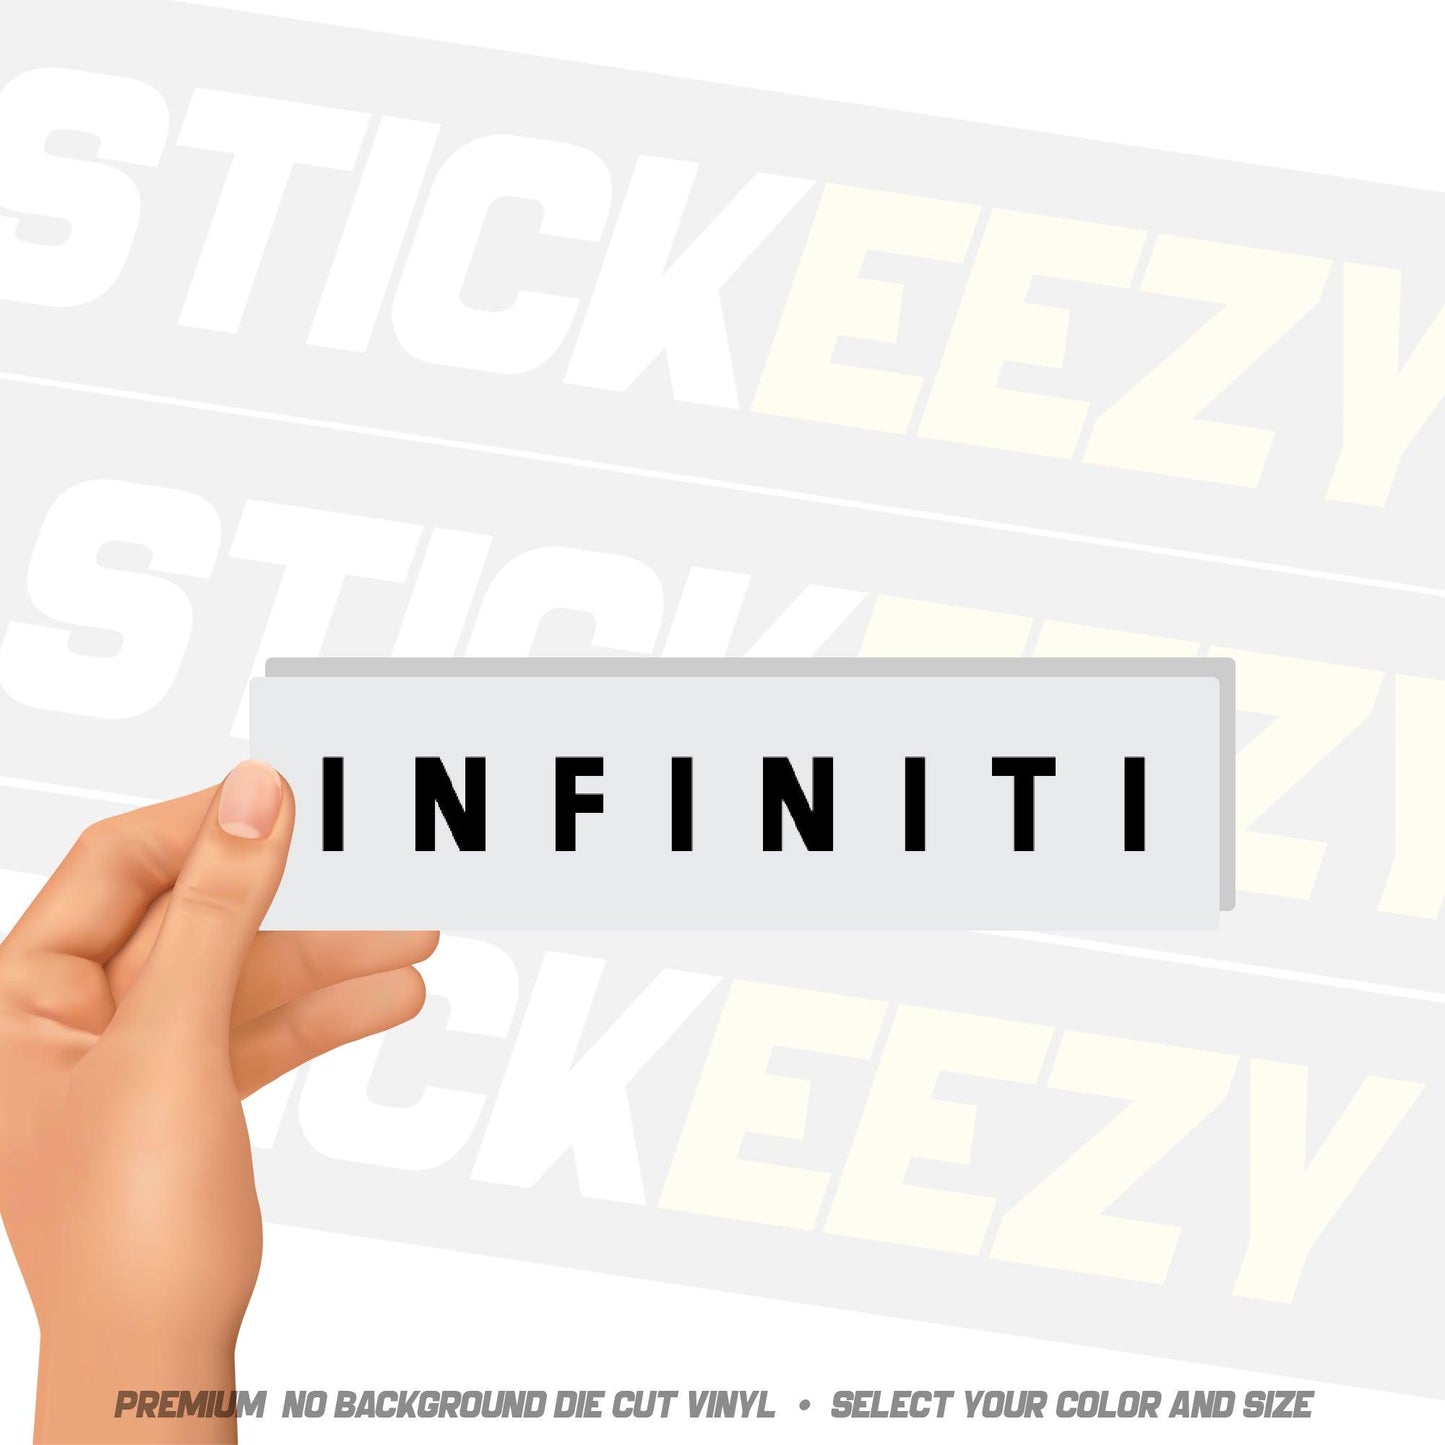 Infiniti Brake Caliper Decal 2 pcs - stickeezy